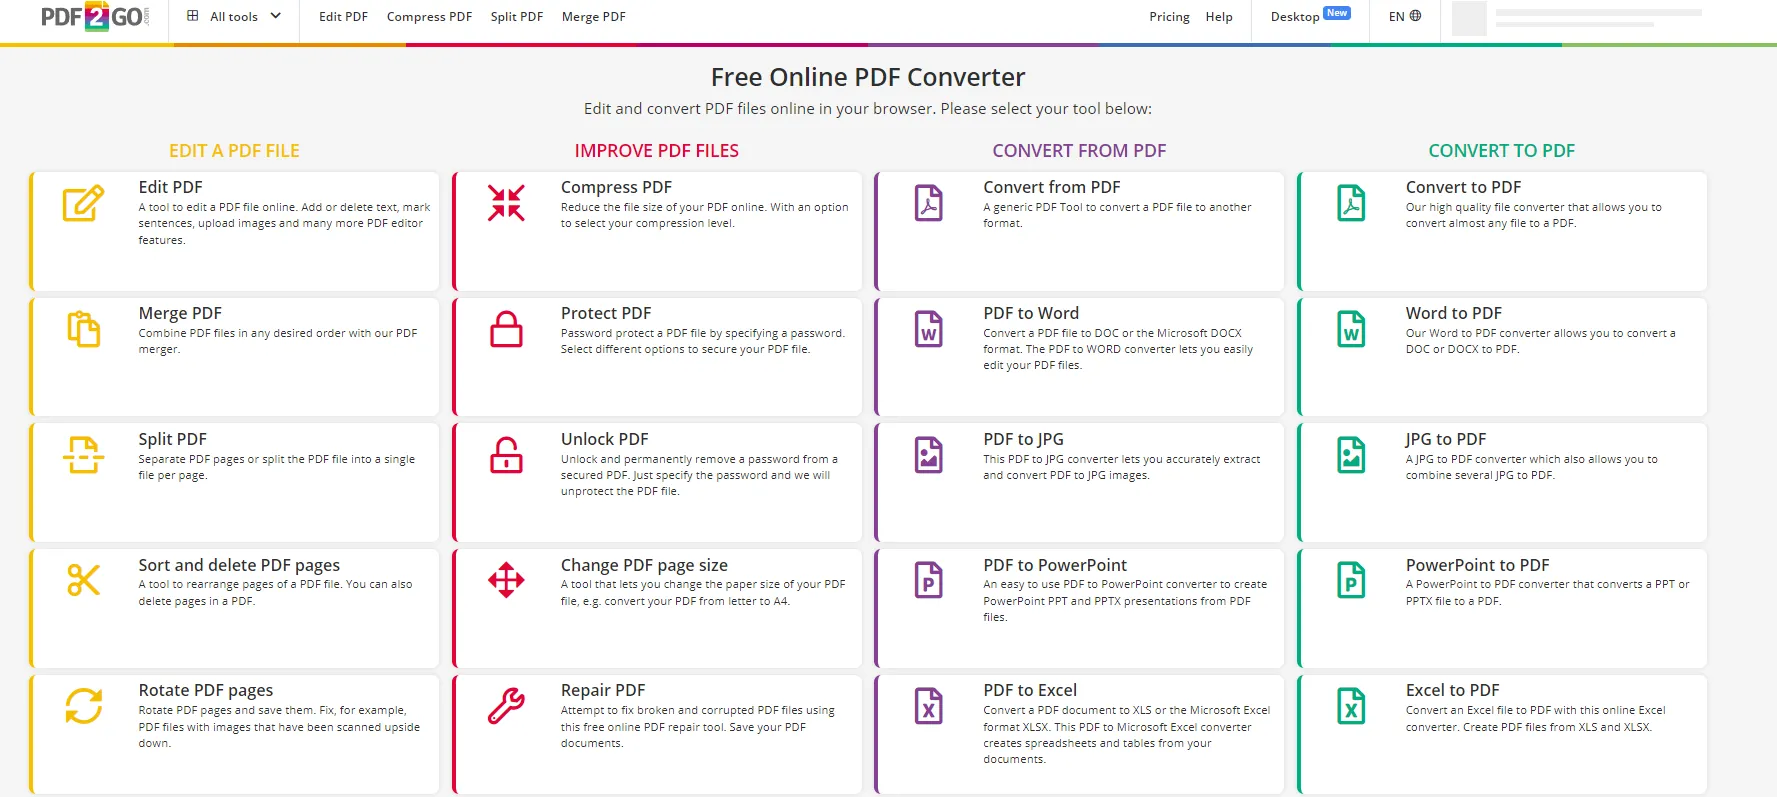 PDF in Text Konverter pdf2go